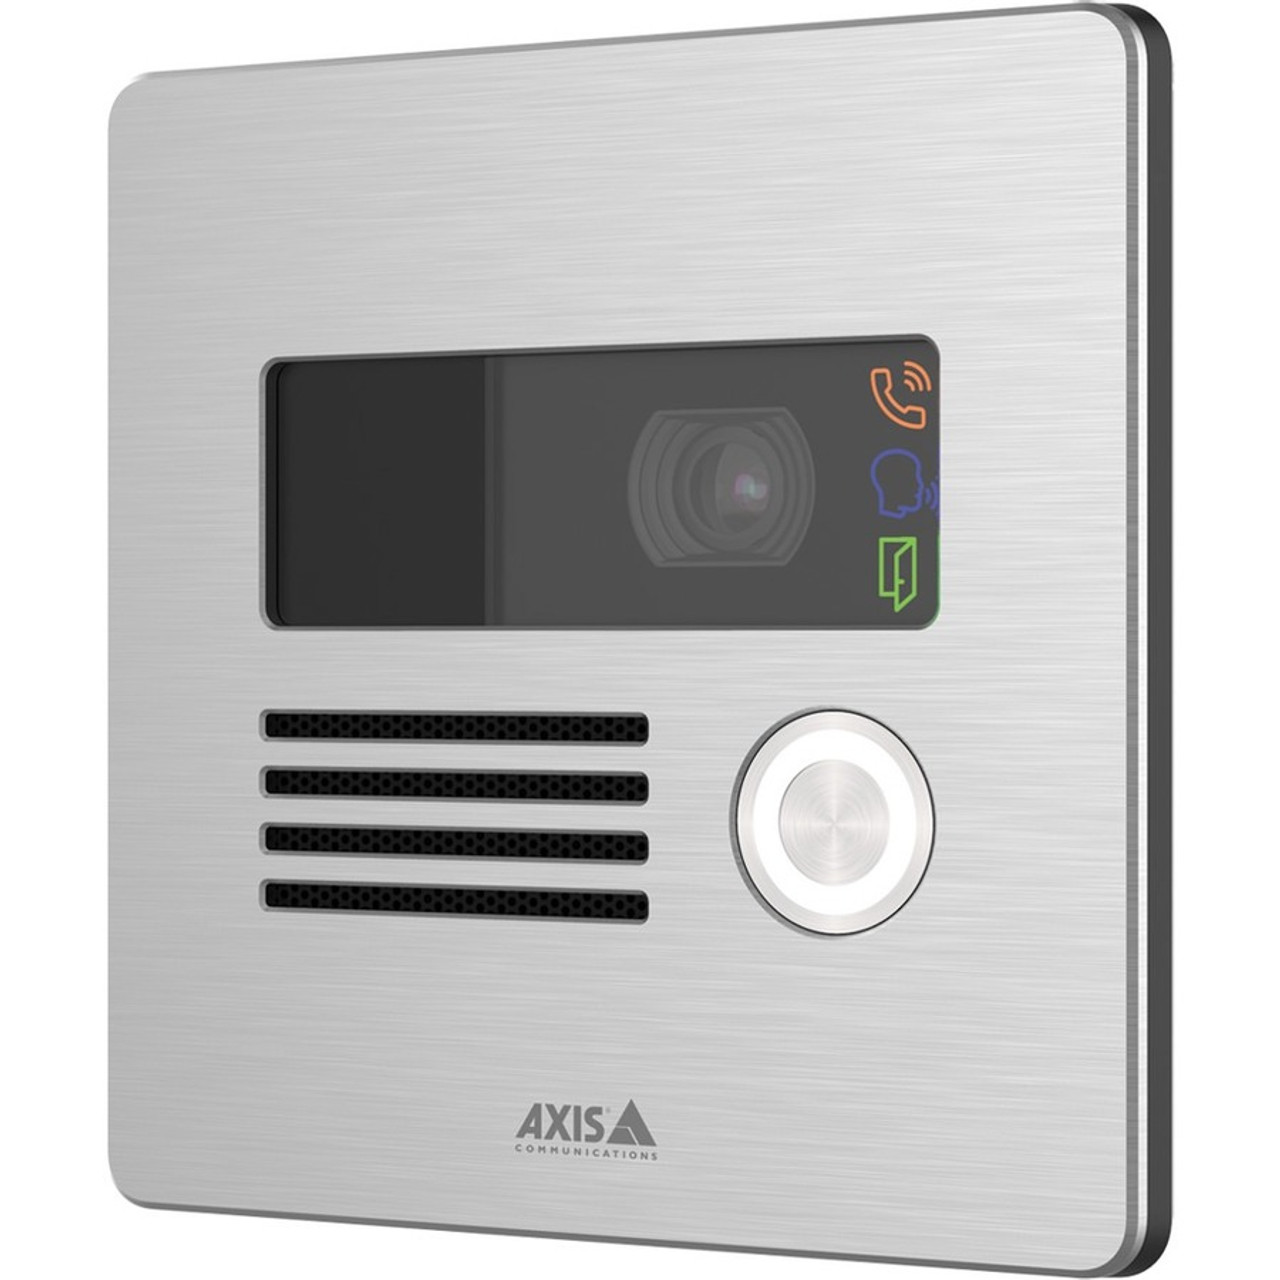 Axis Communications AXIS I8016-LVE Network Video Intercom